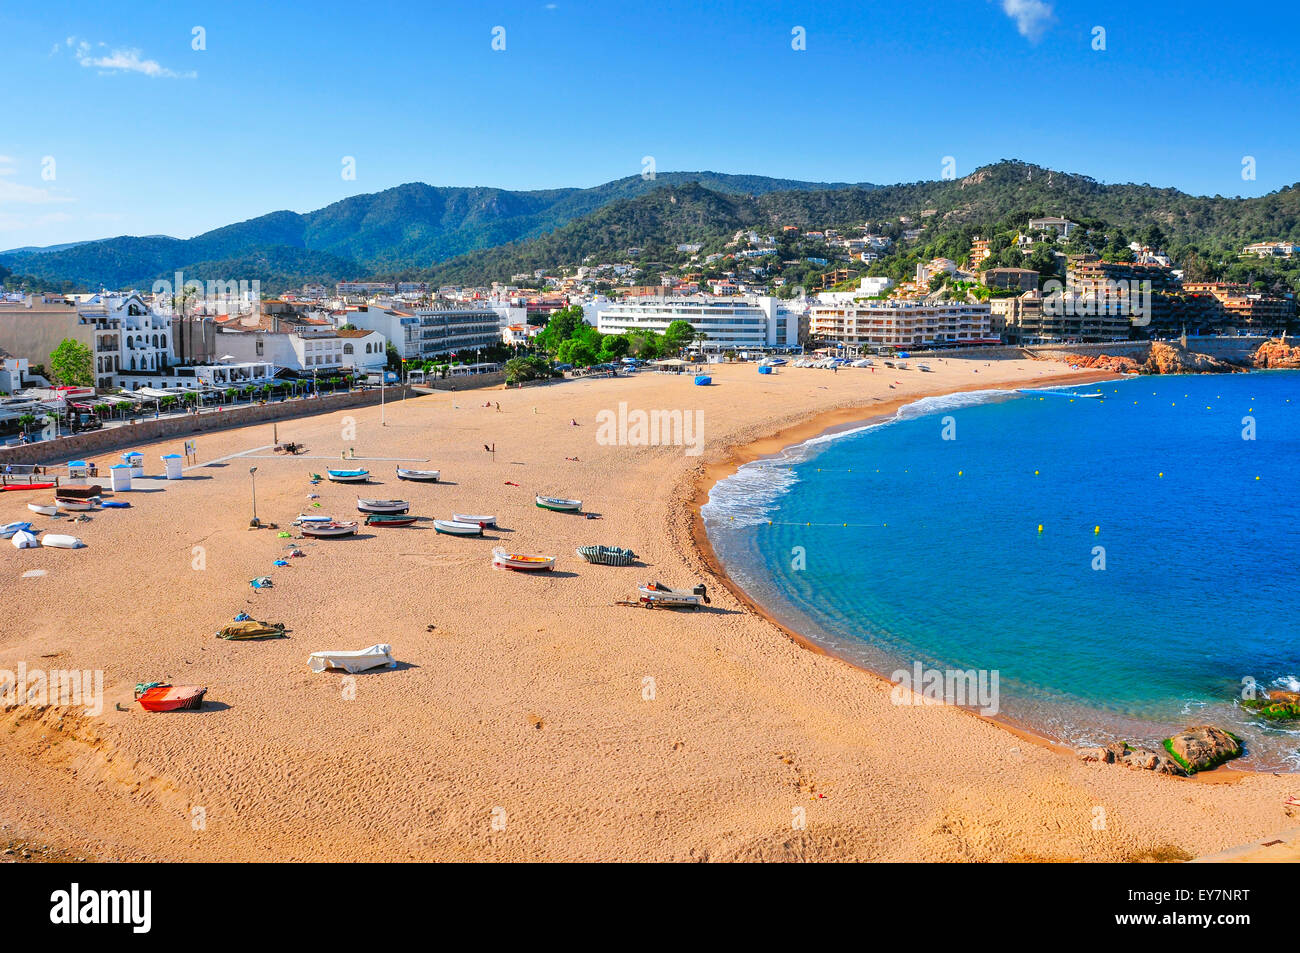 Una vista panoramica di Platja Gran Spiaggia di Tossa de Mar, Costa Brava, Spagna Foto Stock